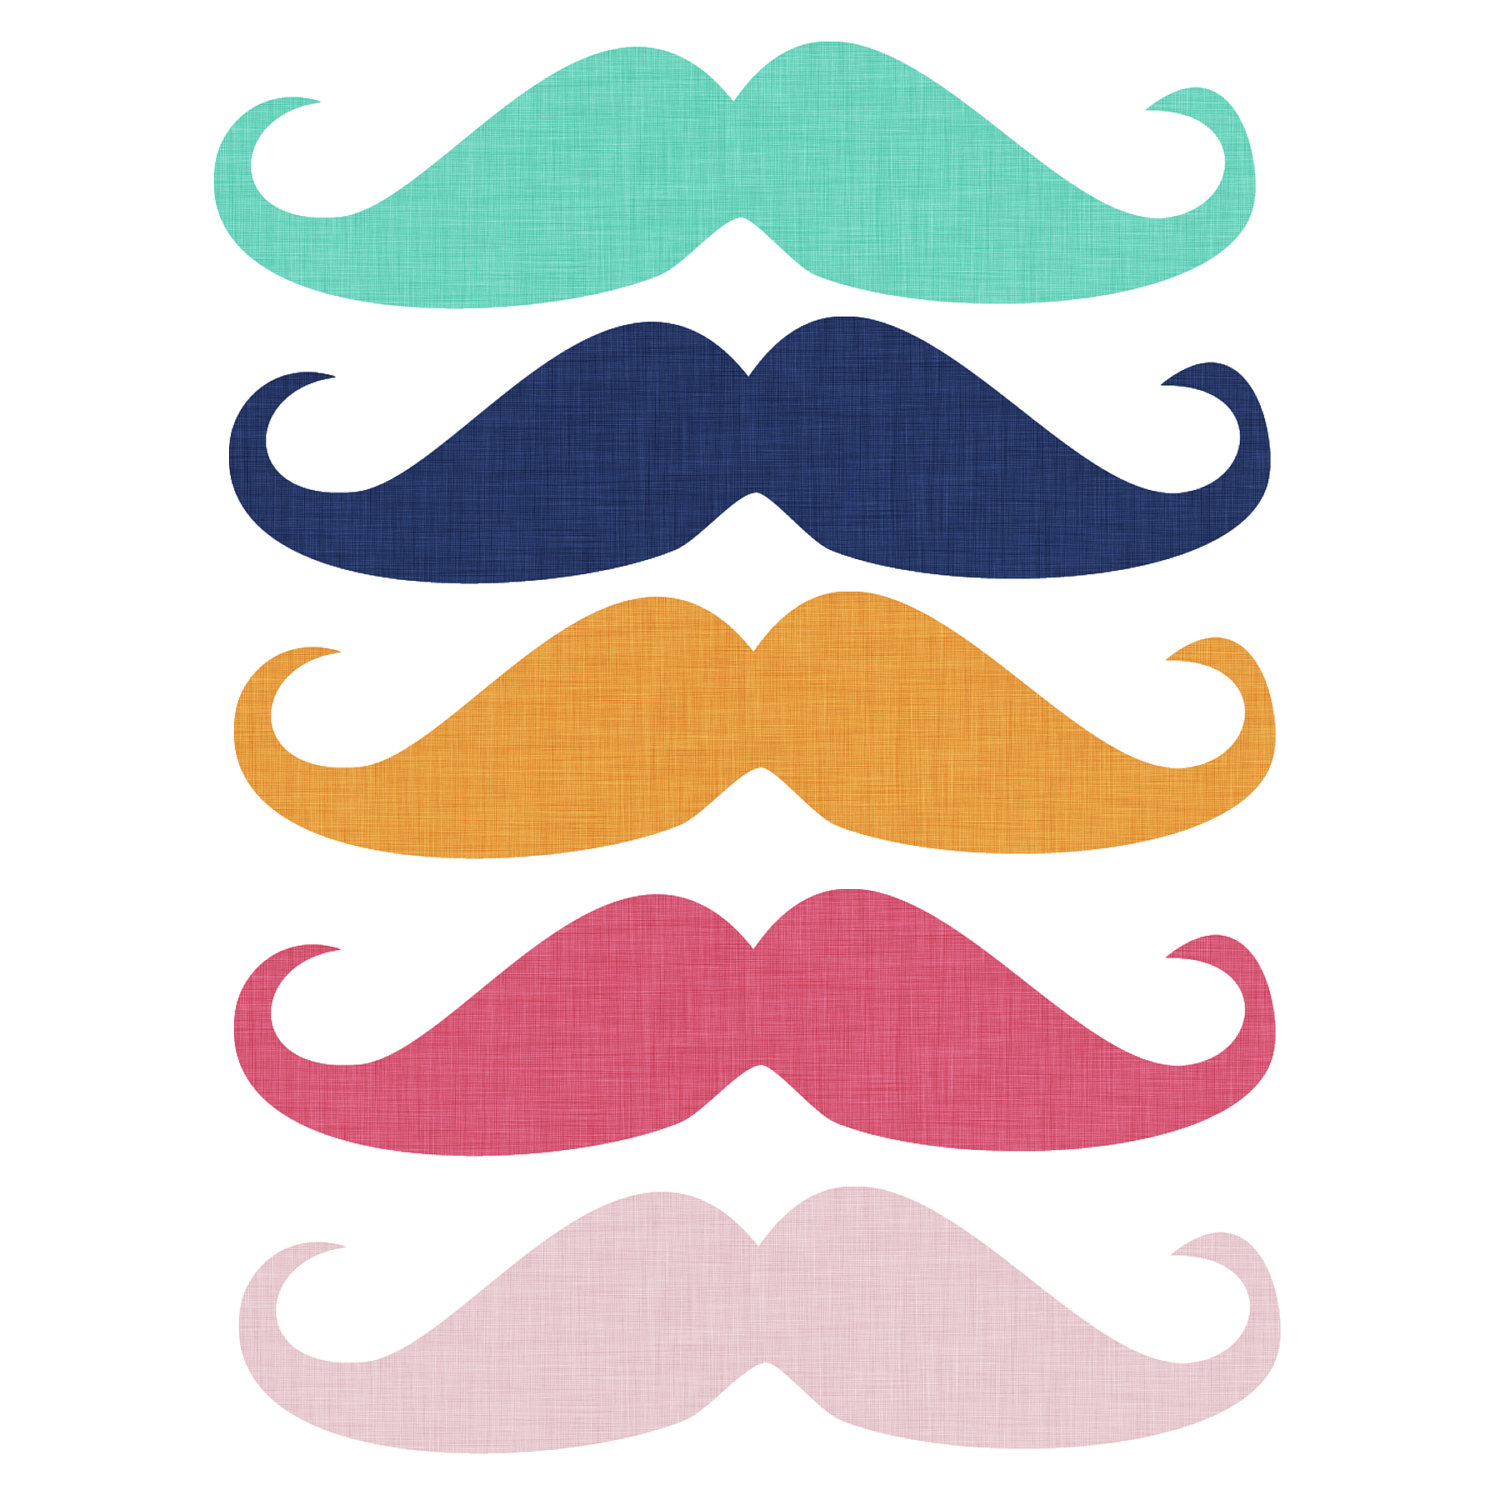 mustache clip art jpg - photo #32